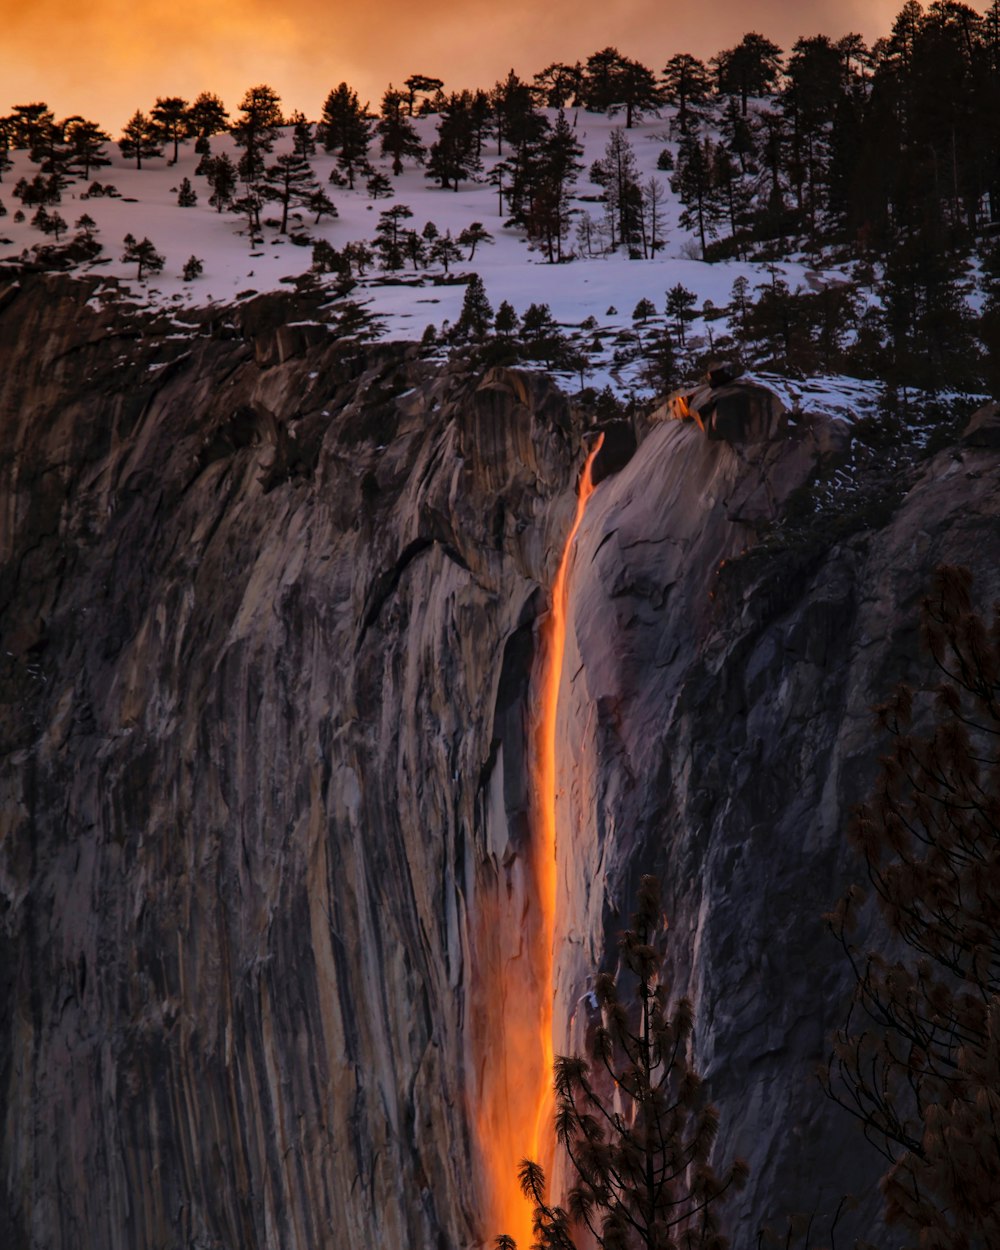 waterfalls near cliff at golden hour